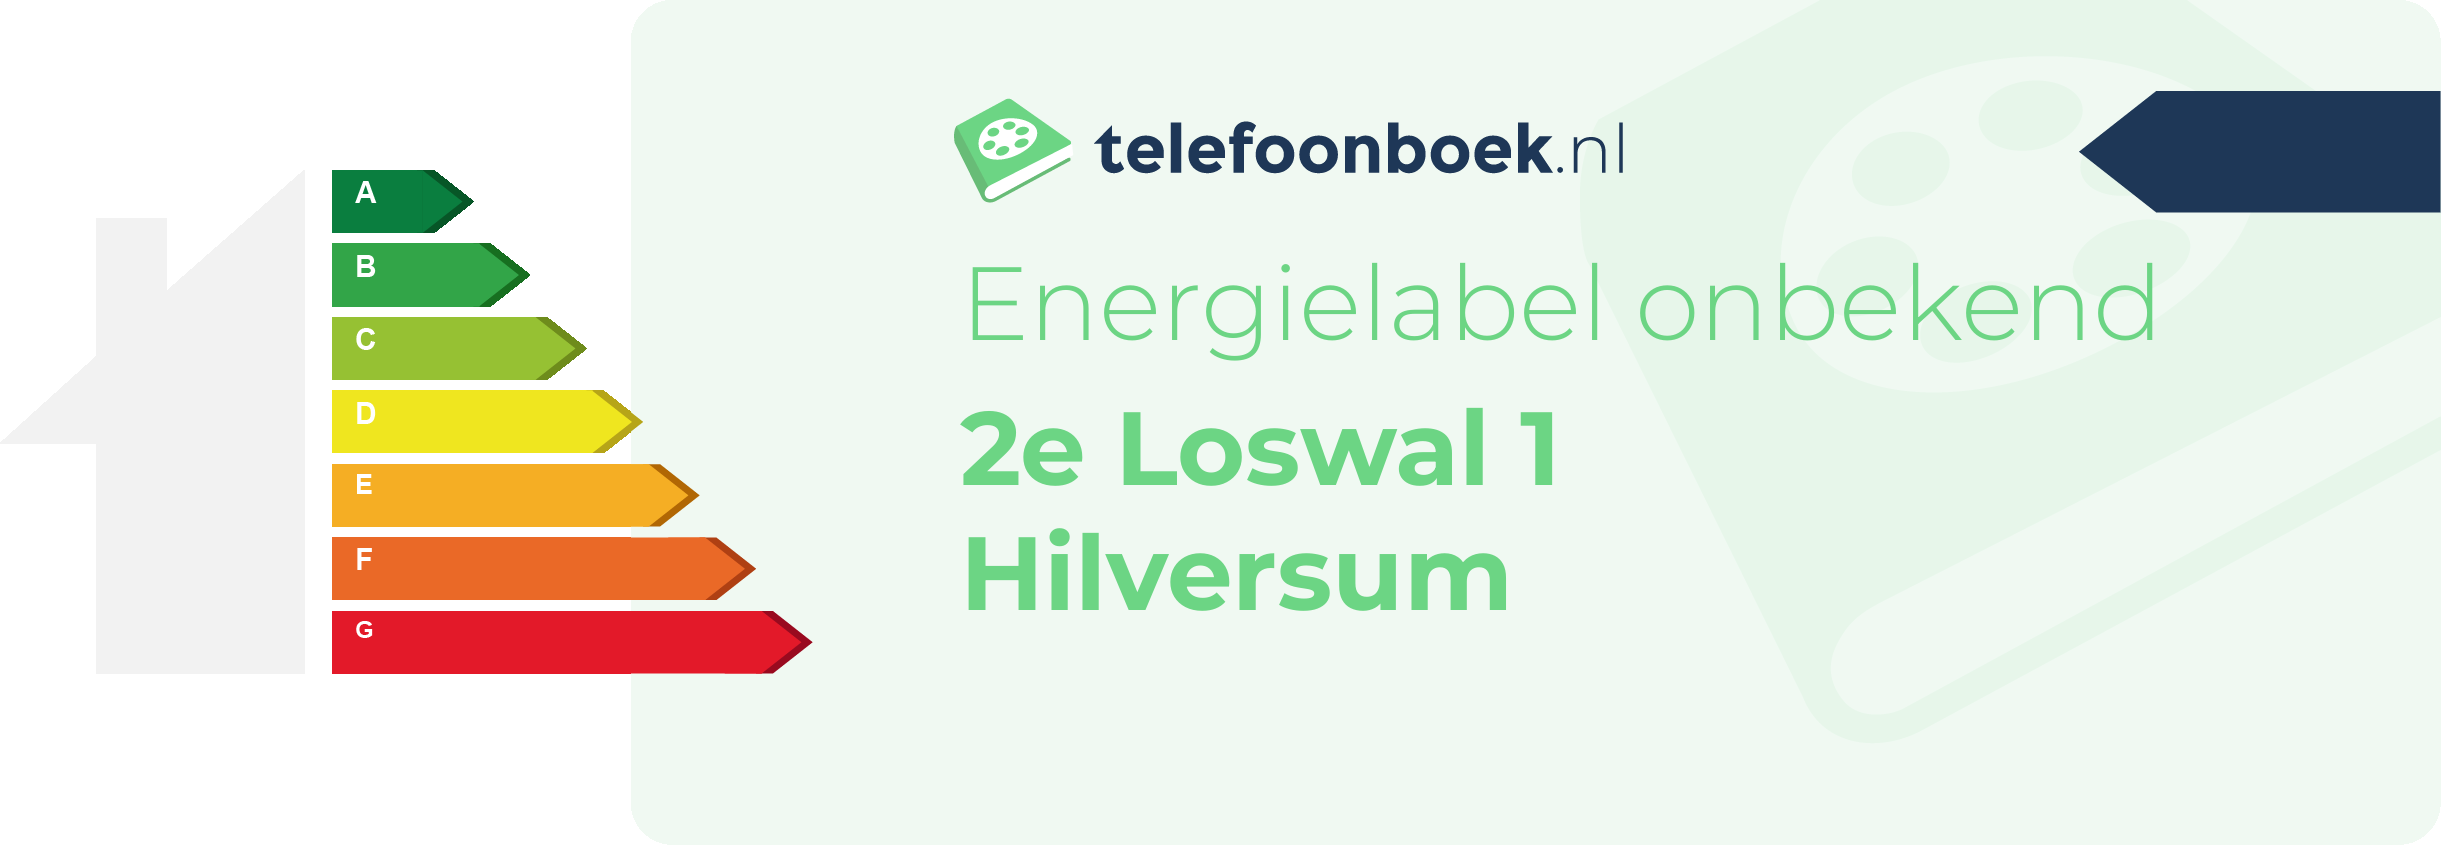 Energielabel 2e Loswal 1 Hilversum